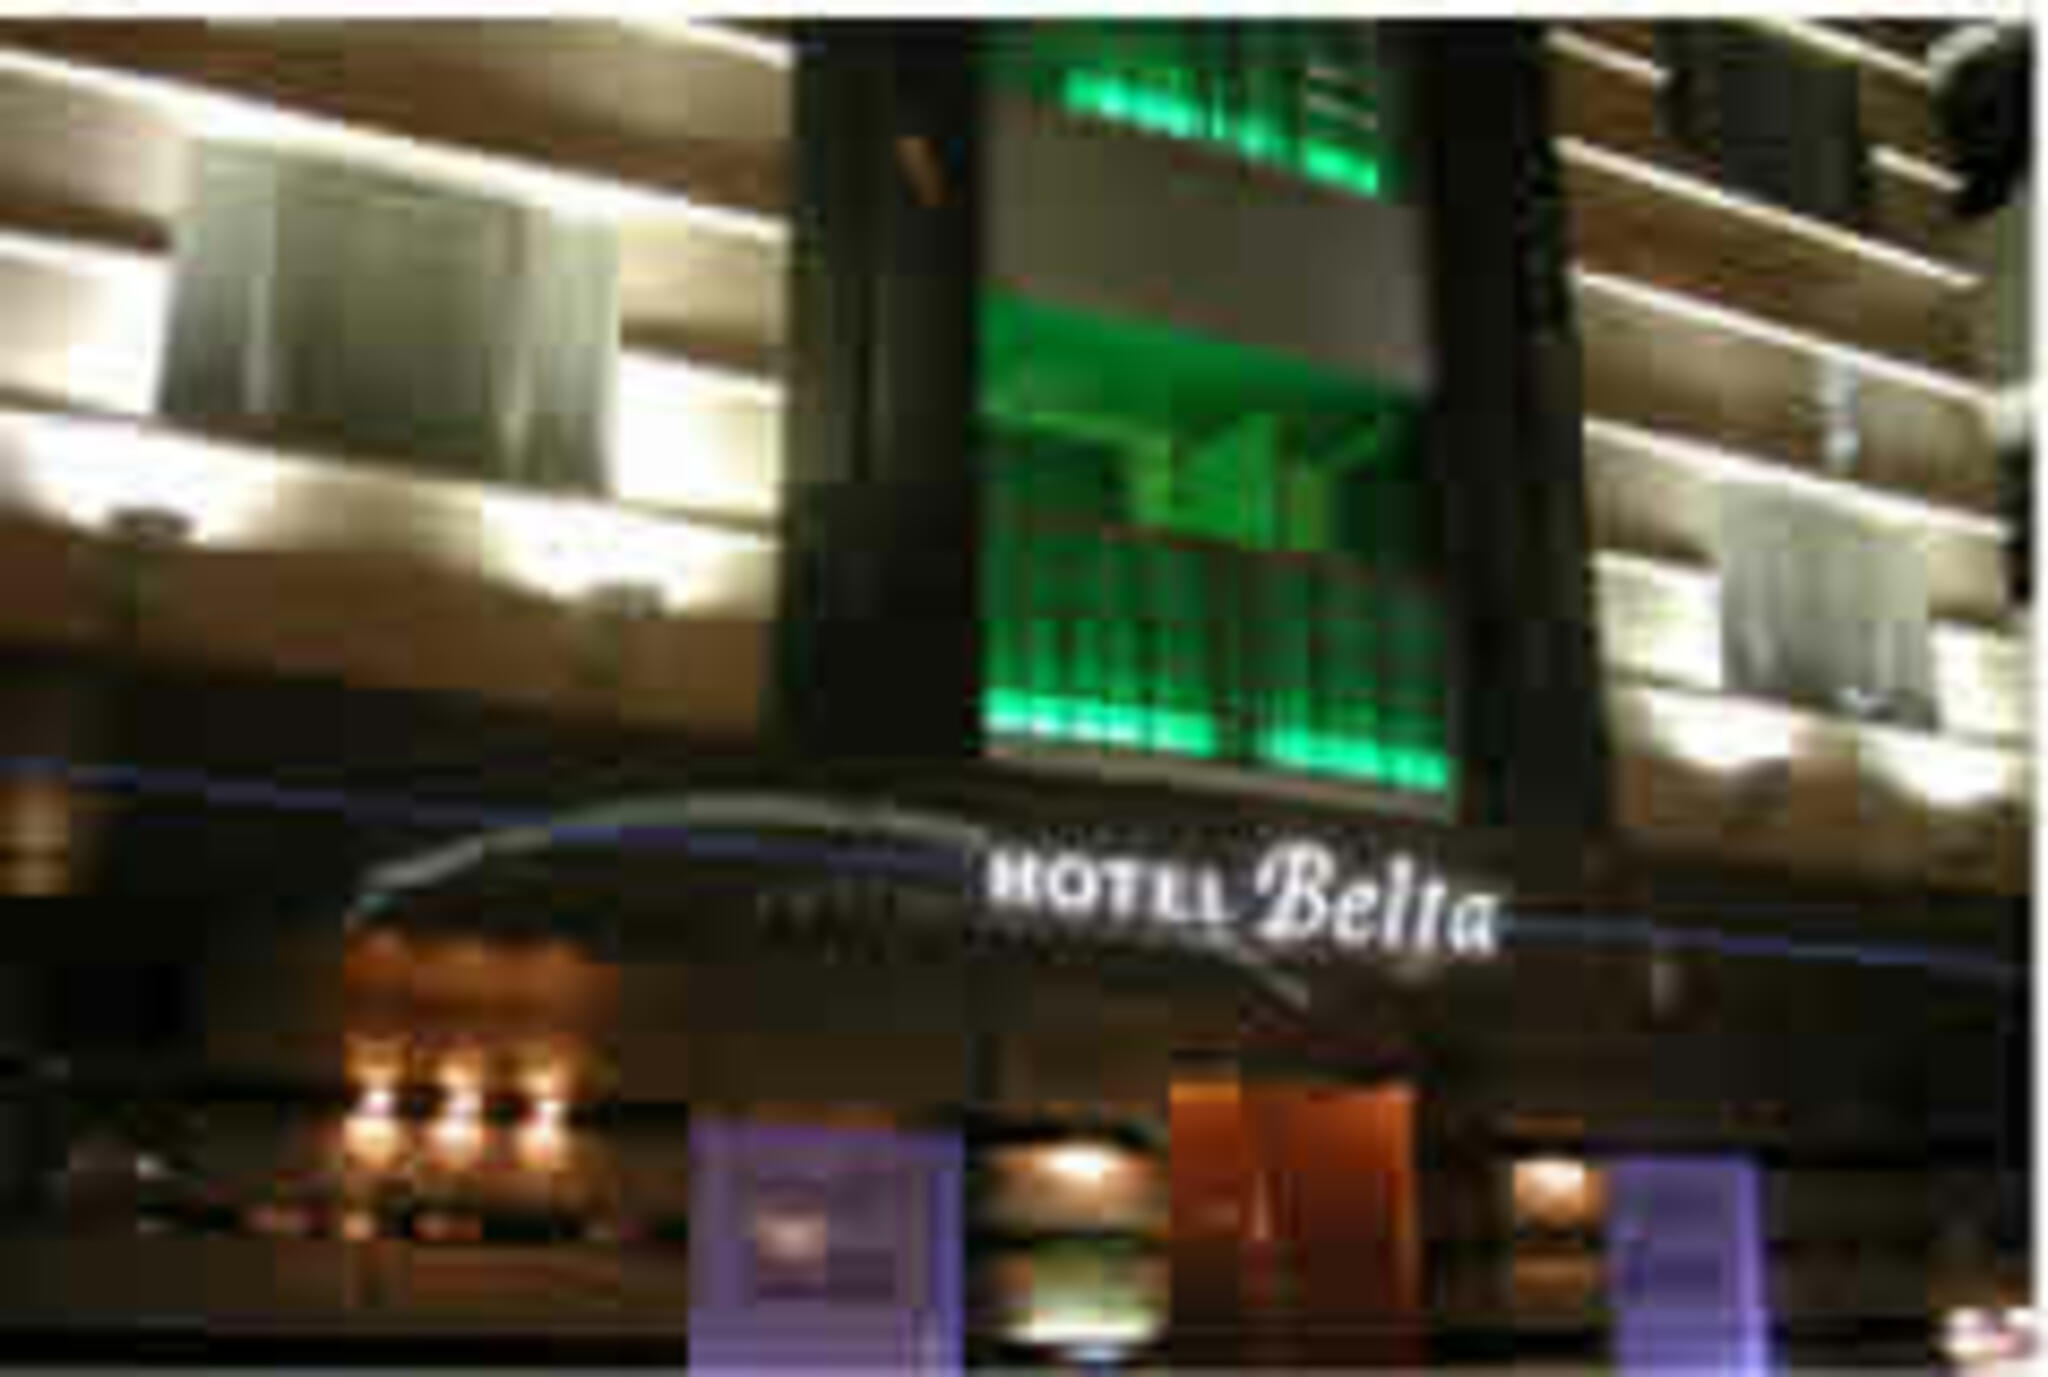 HOTEL Beltaの代表写真6